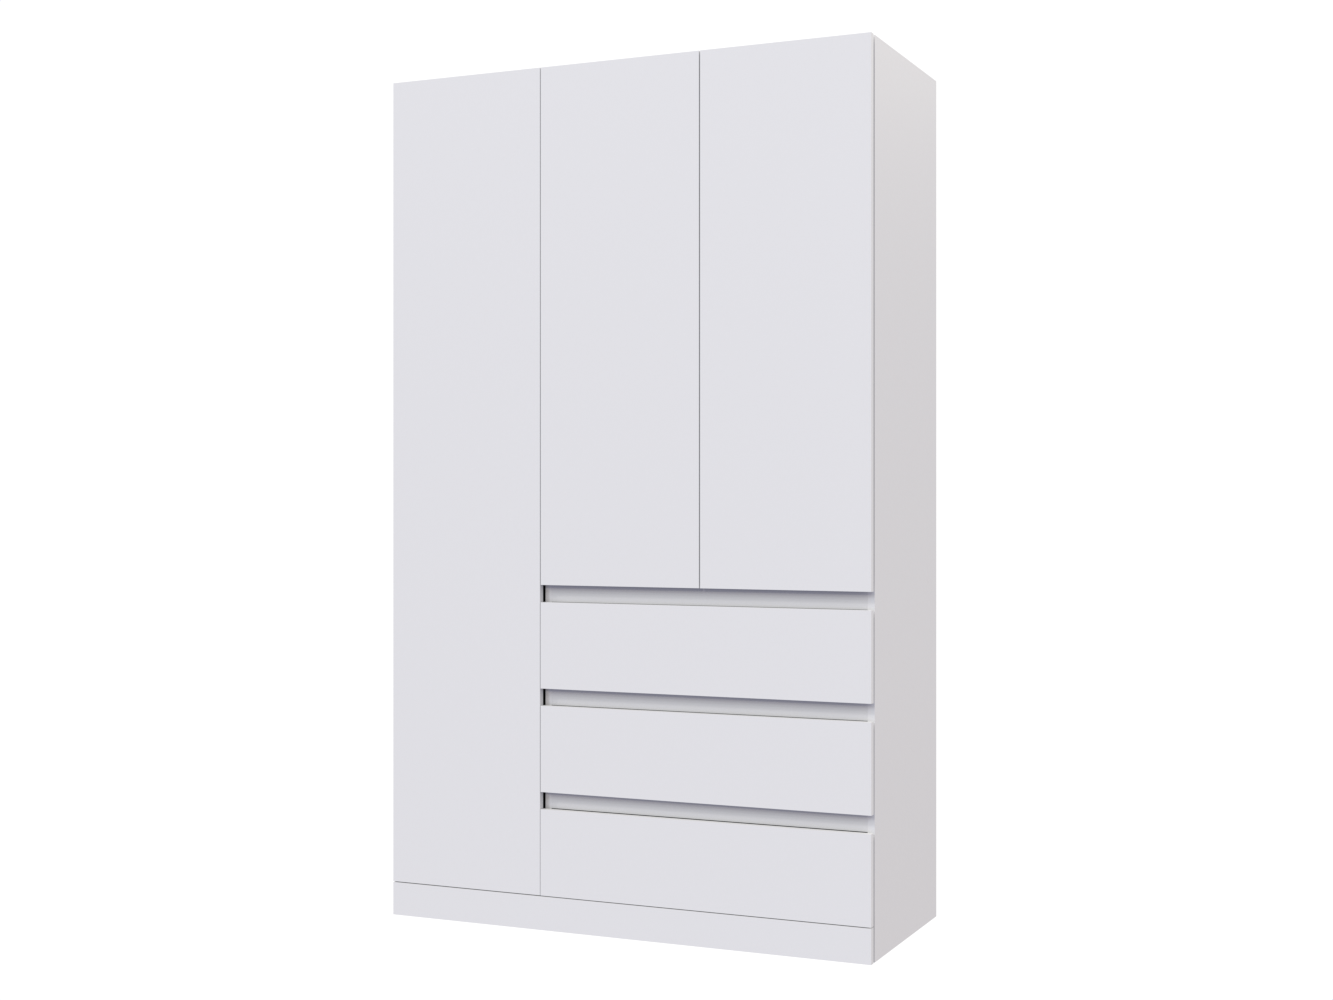 Распашной шкаф Мальм 314 white ИКЕА (IKEA) изображение товара